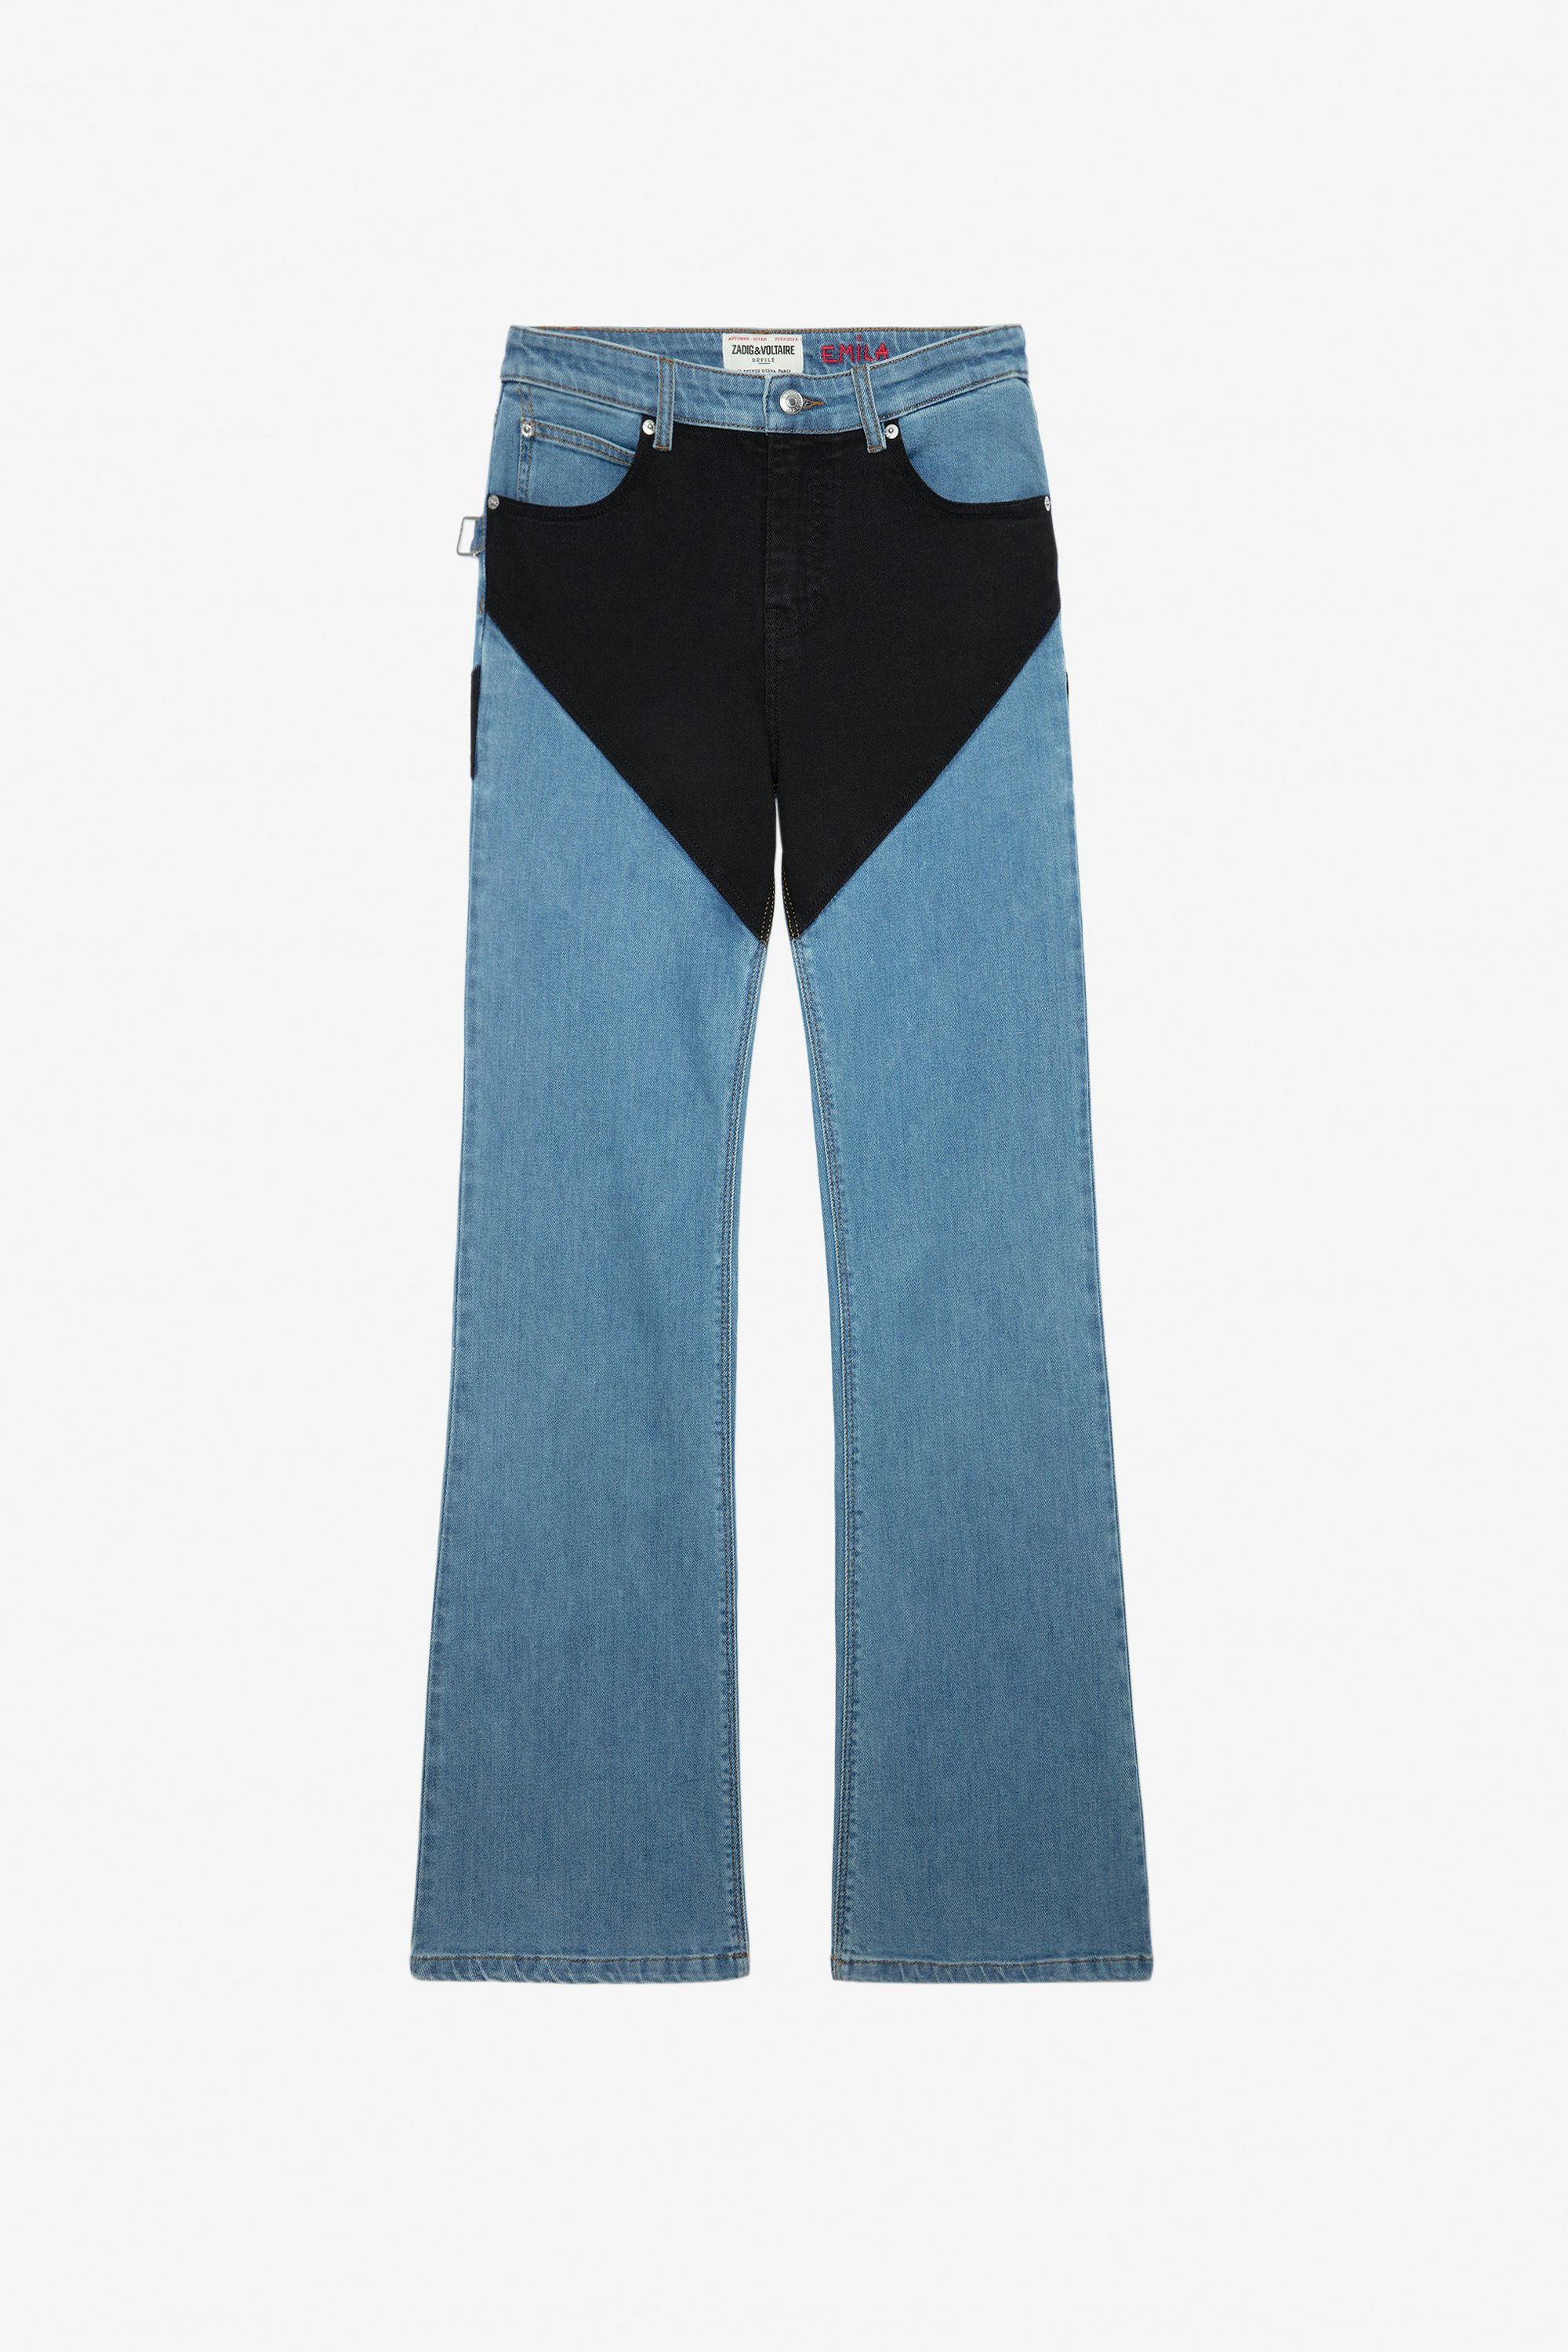 Emila Jeans - Women’s wide-leg blue denim jeans with contrasting black panels.